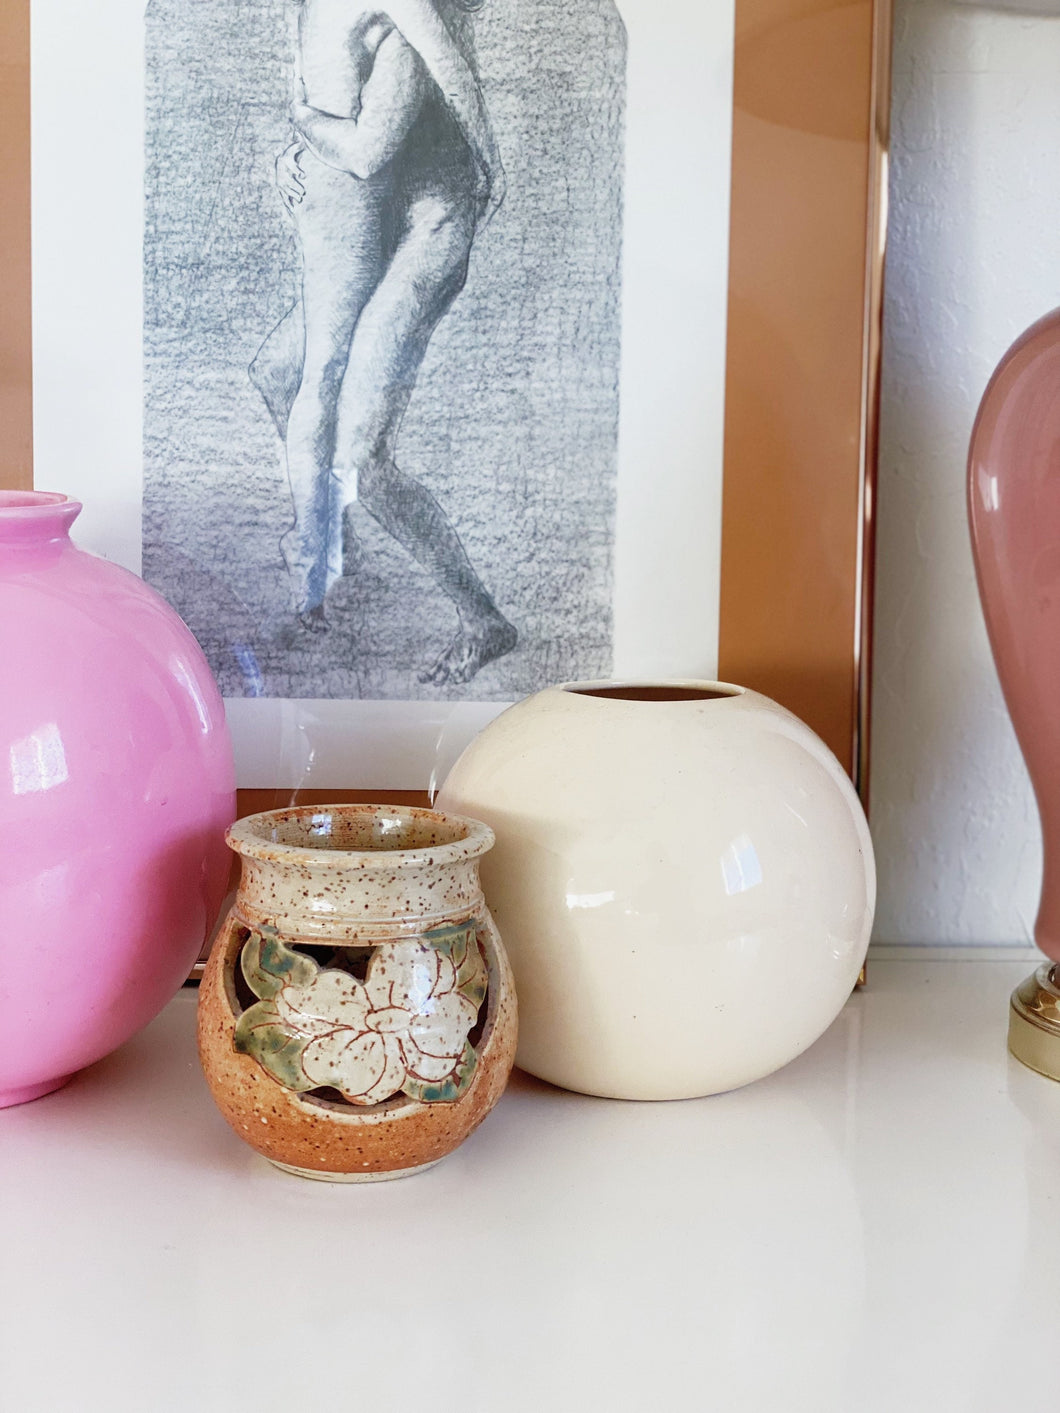 Vintage Earth Tone Speckled Ceramic Jar with Floral Cut Out Design